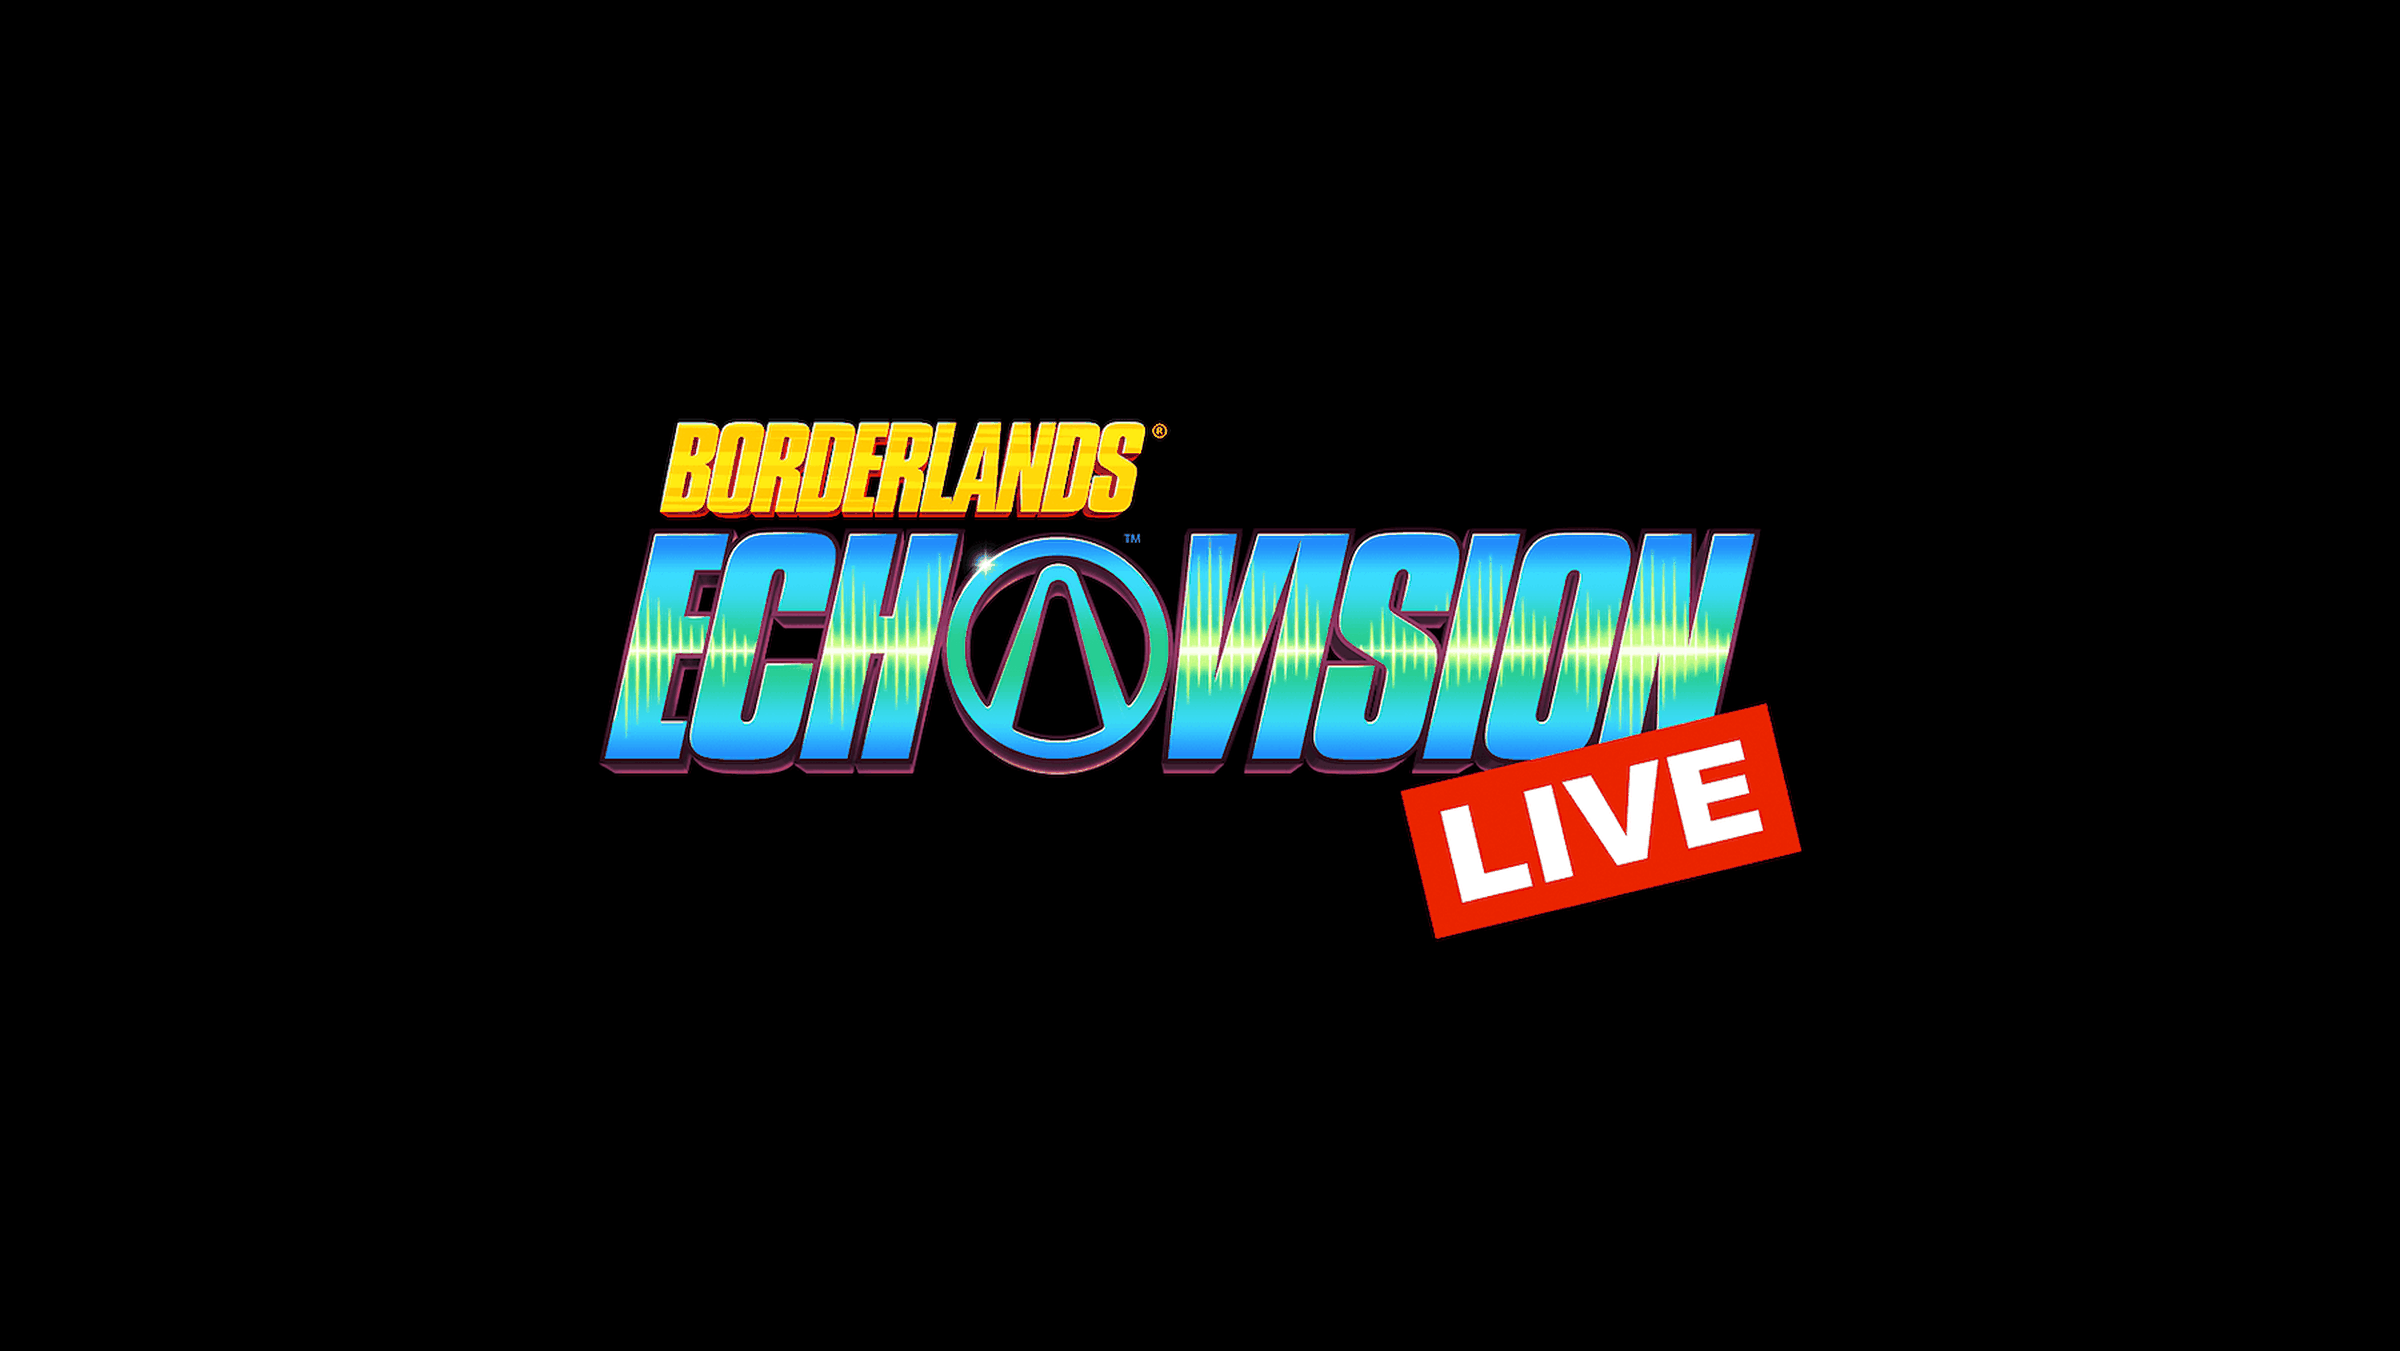 A promotional image for Borderlands EchoVision Live.